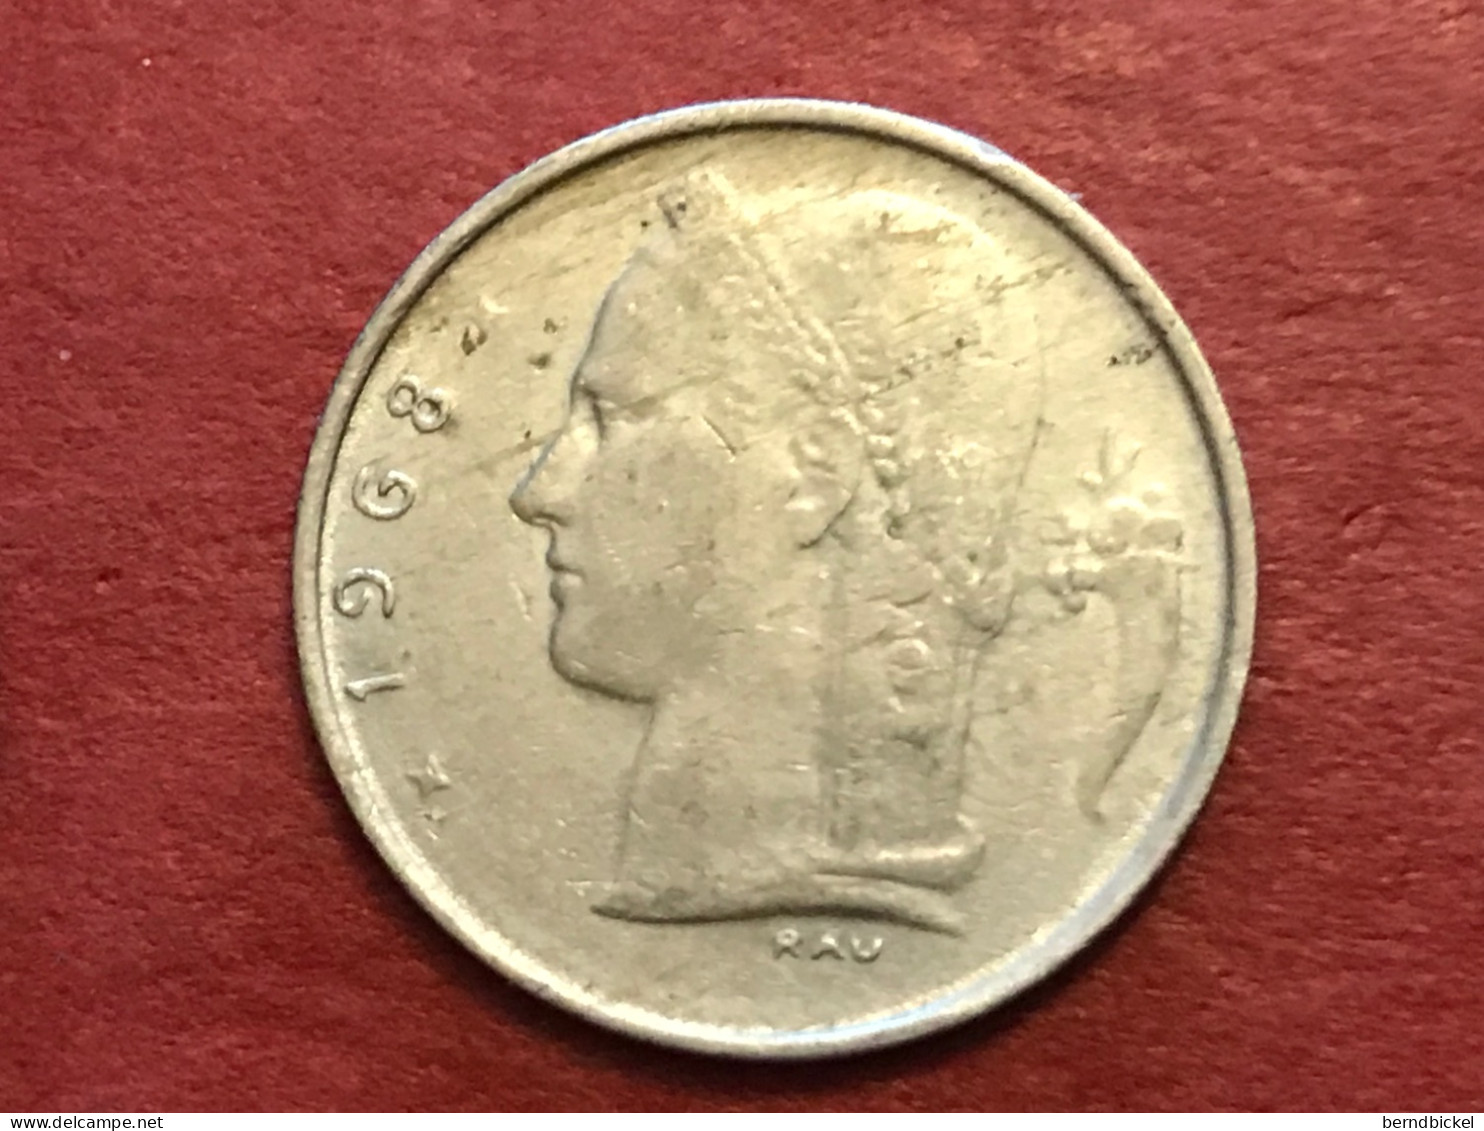 Münze Münzen Umlaufmünze Belgien 1 Franc 1968 Belgique - 1 Franc